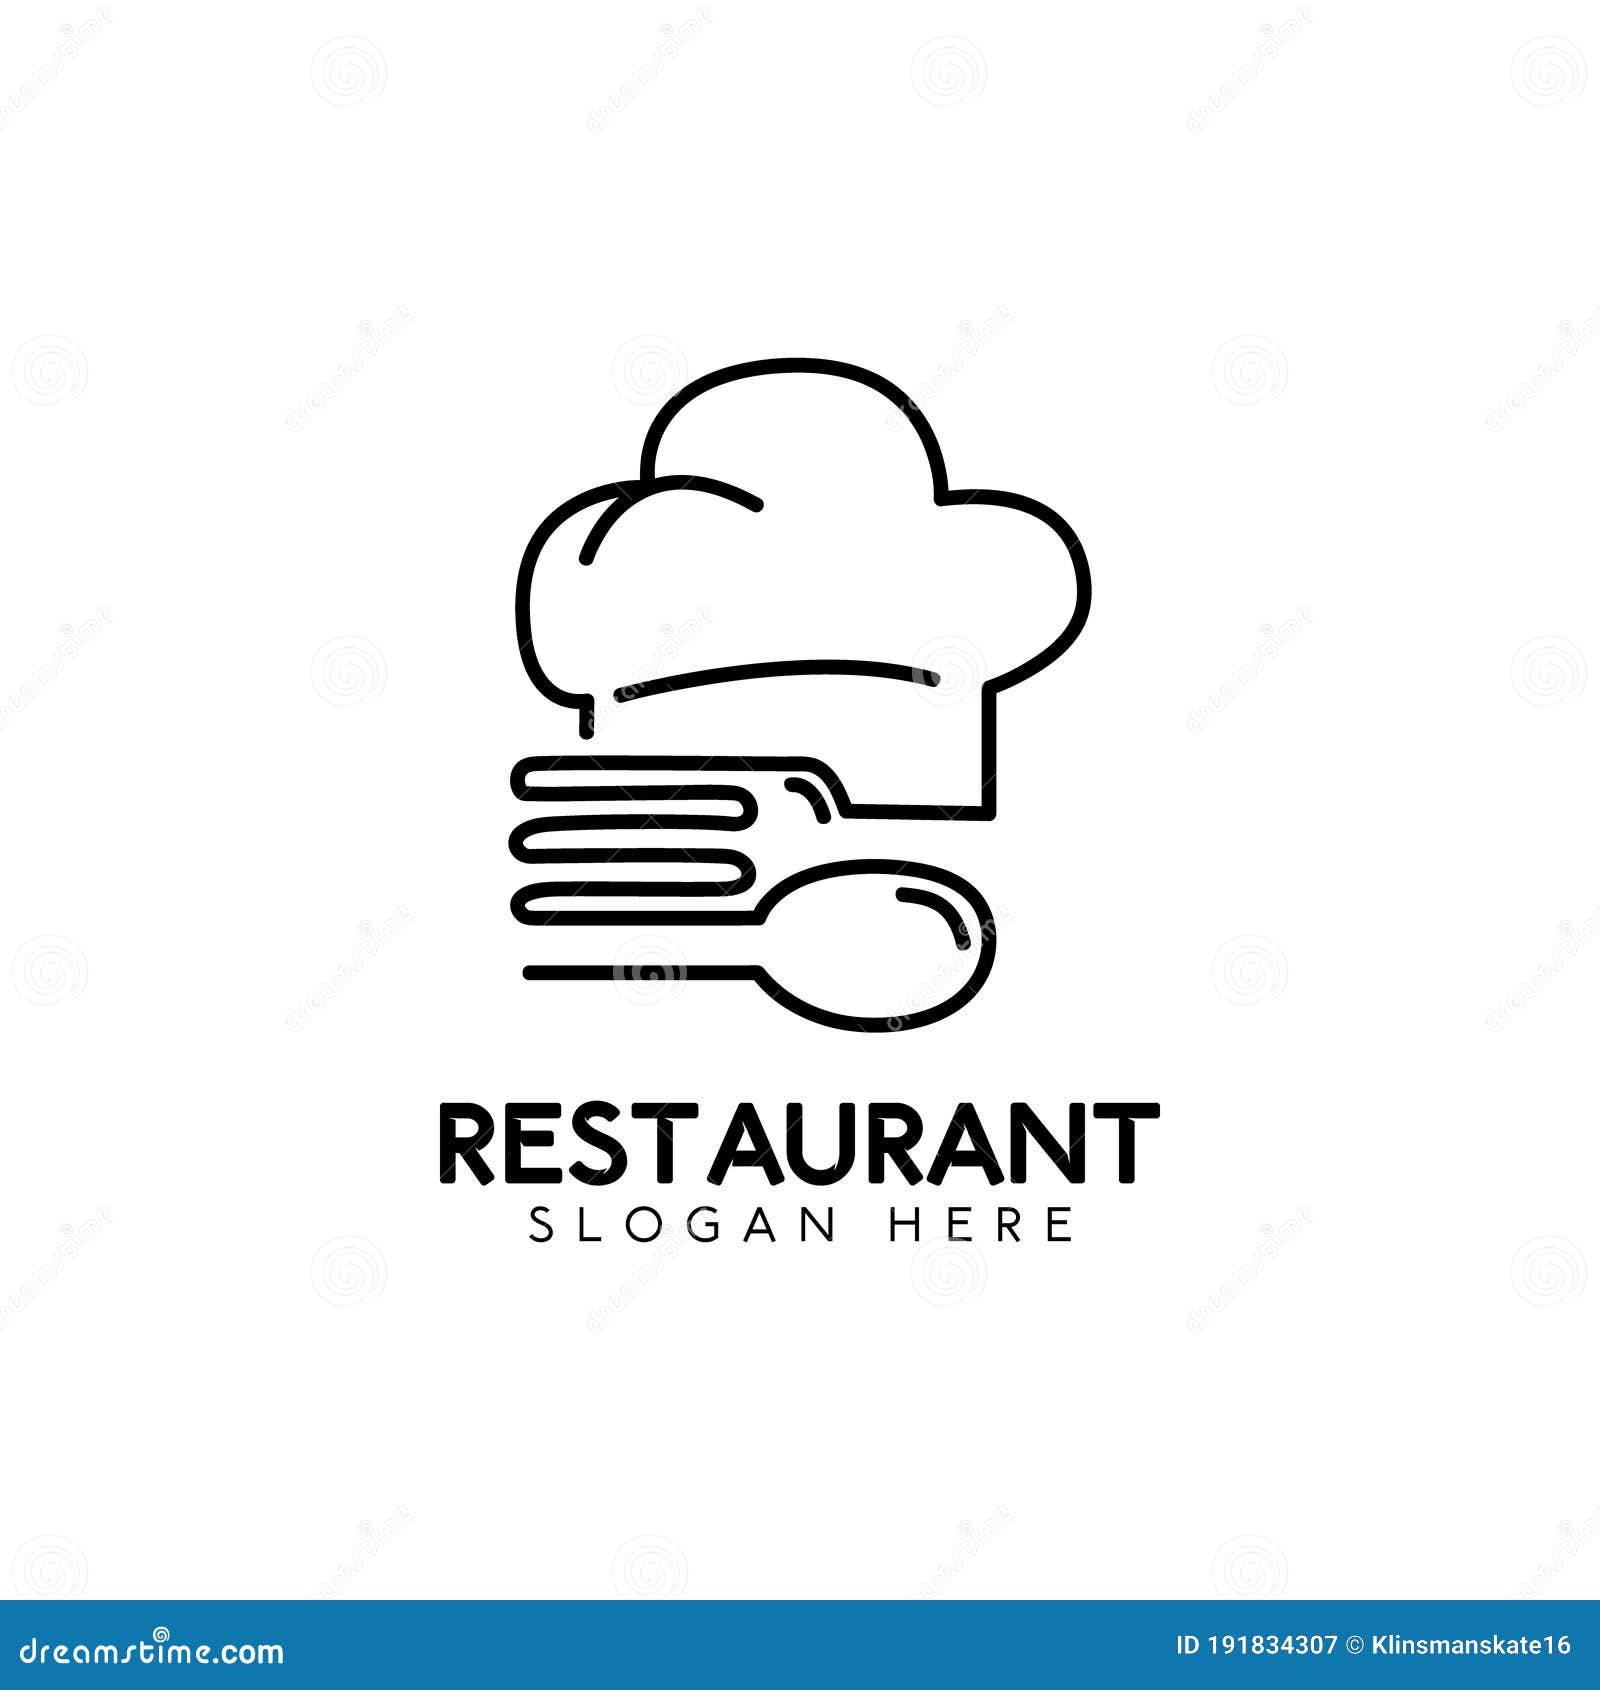 Minimal and Modern Restaurant Logo Design Template Vector Stock ...